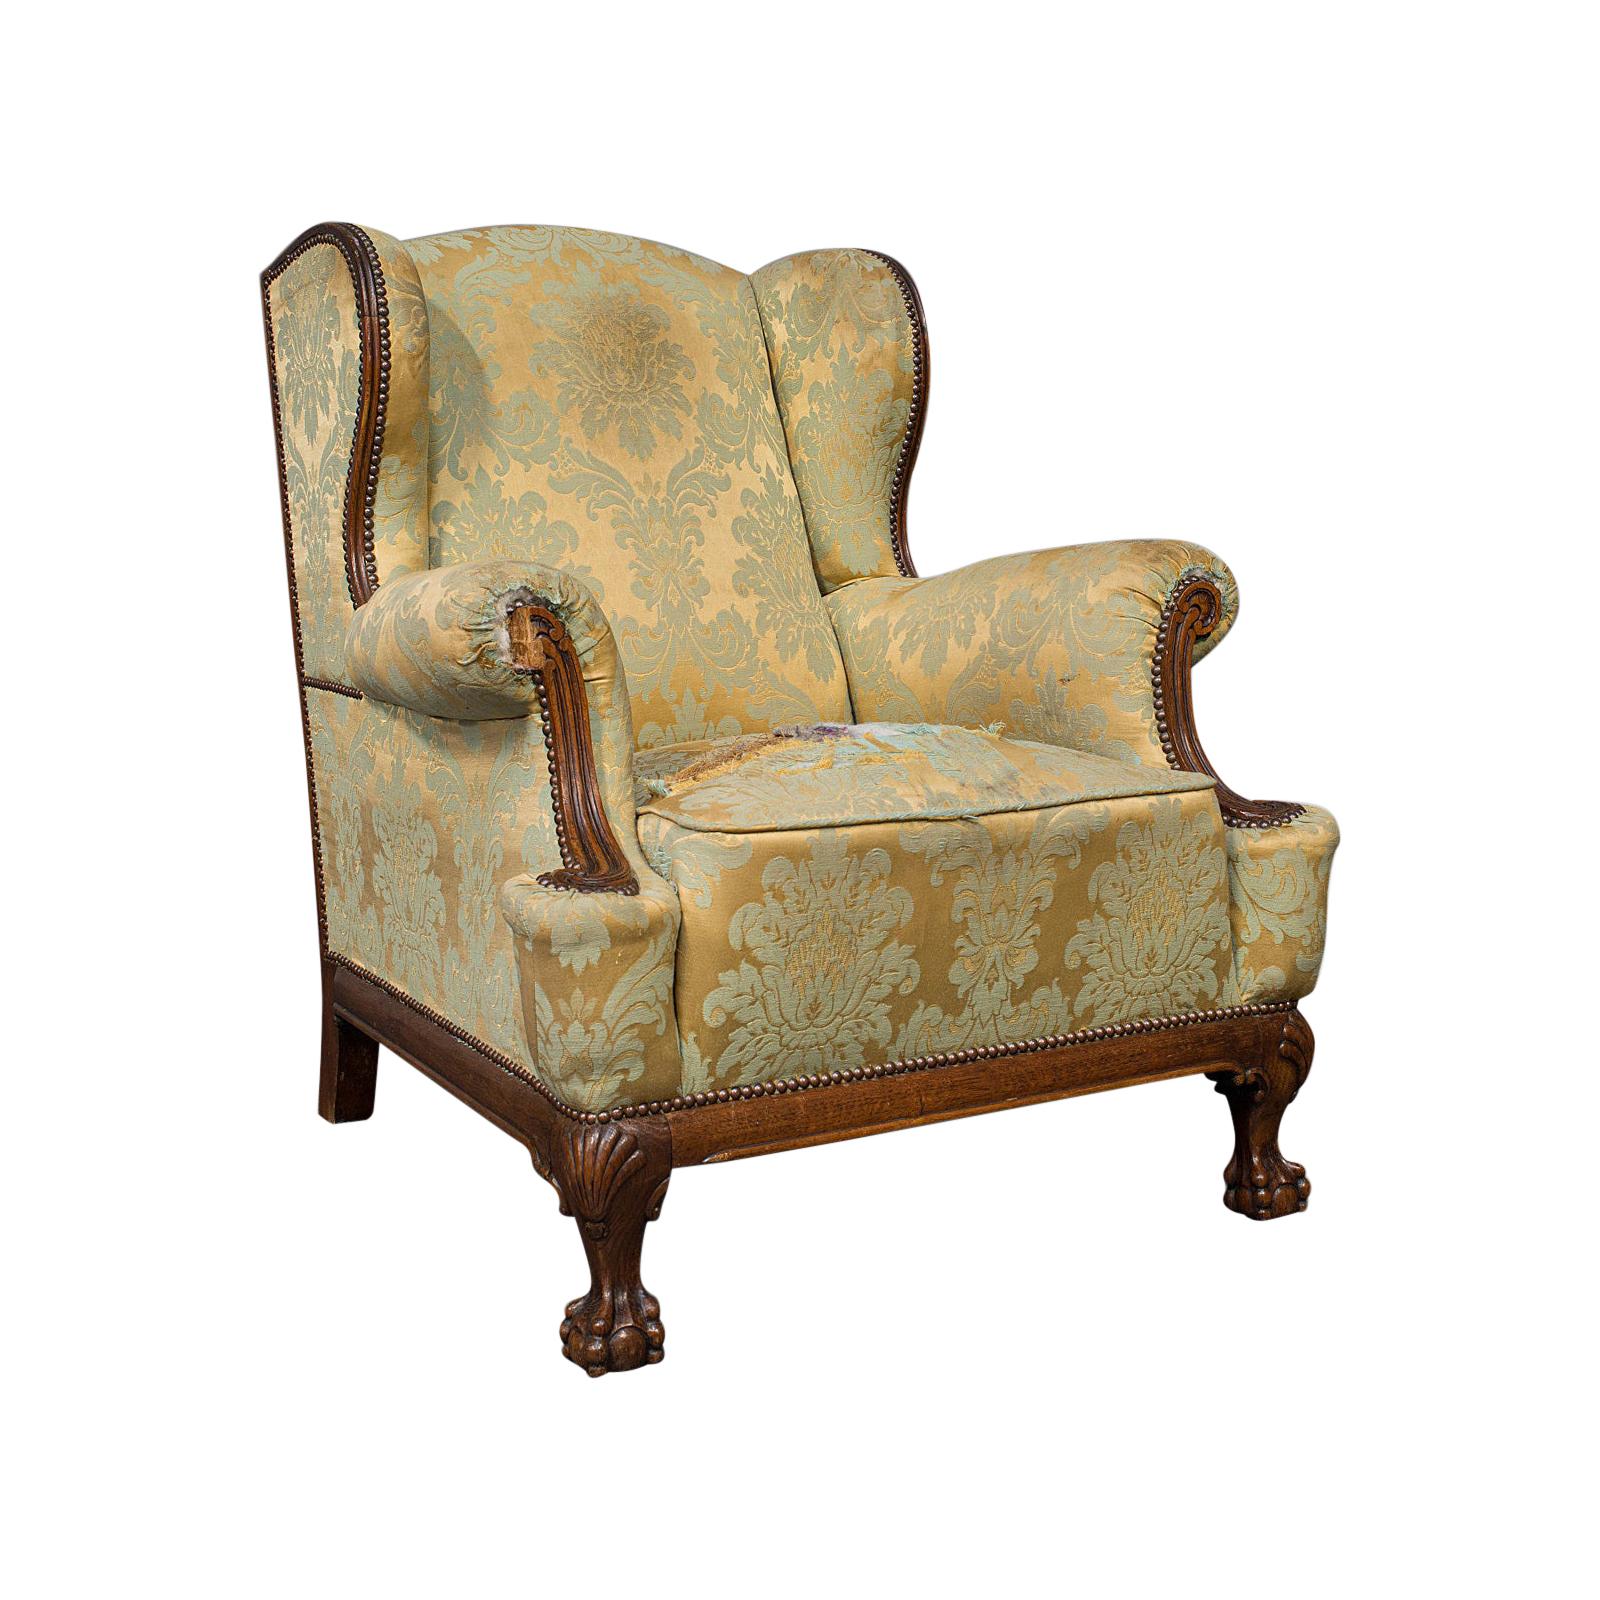 Antique Wing-Back Armchair, English, Fireside, Lounge, Seat, Edwardian, 1910